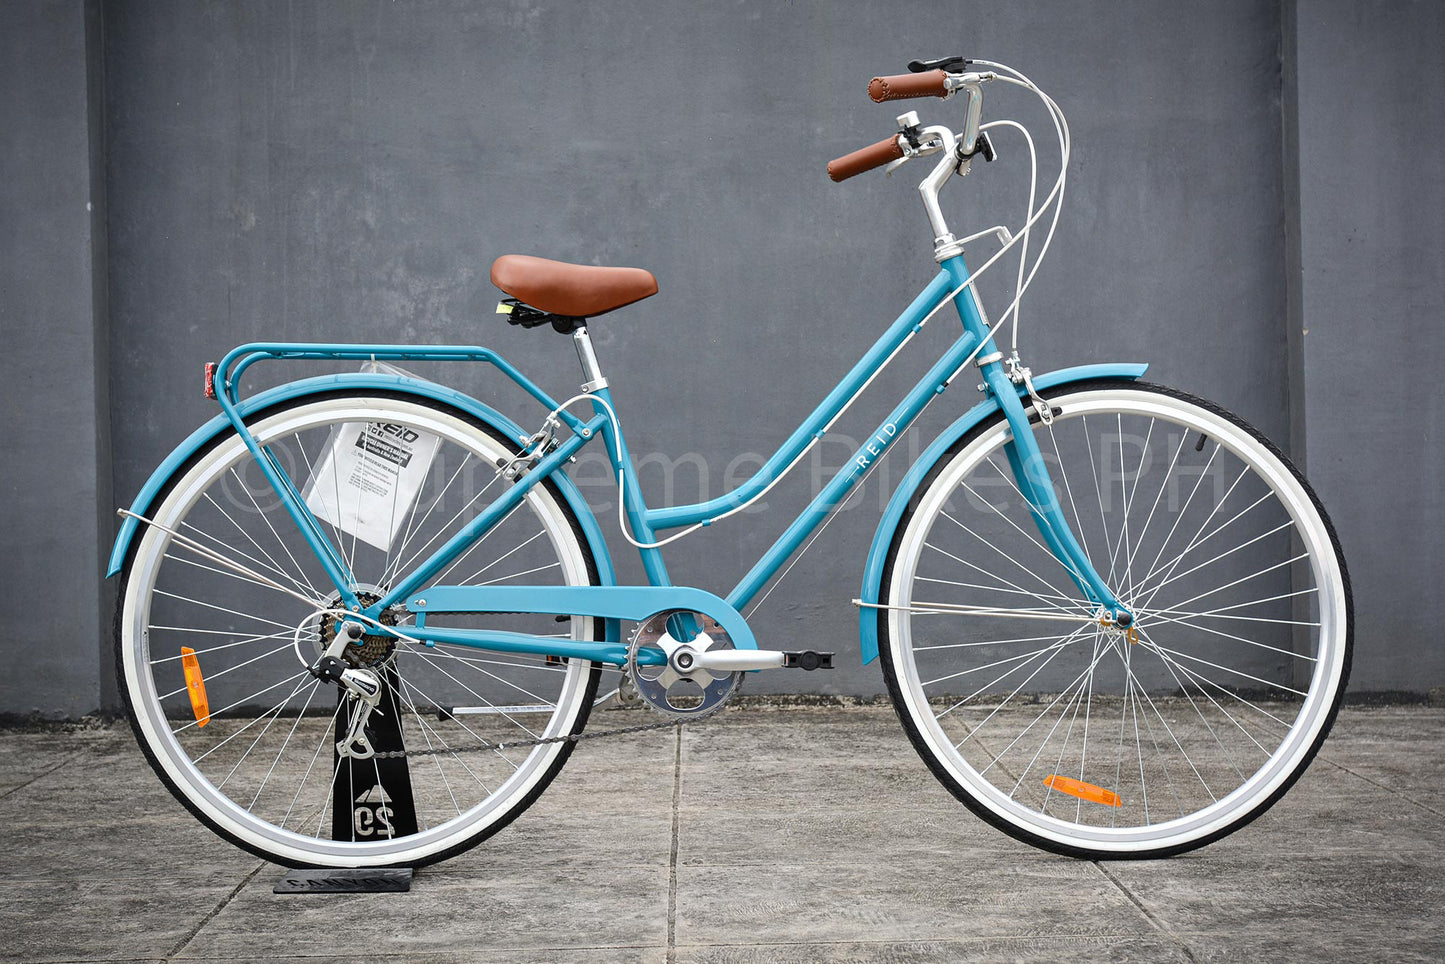 Reid Ladies Classic Vintage Commuter Bike 7-Speed - Aqua